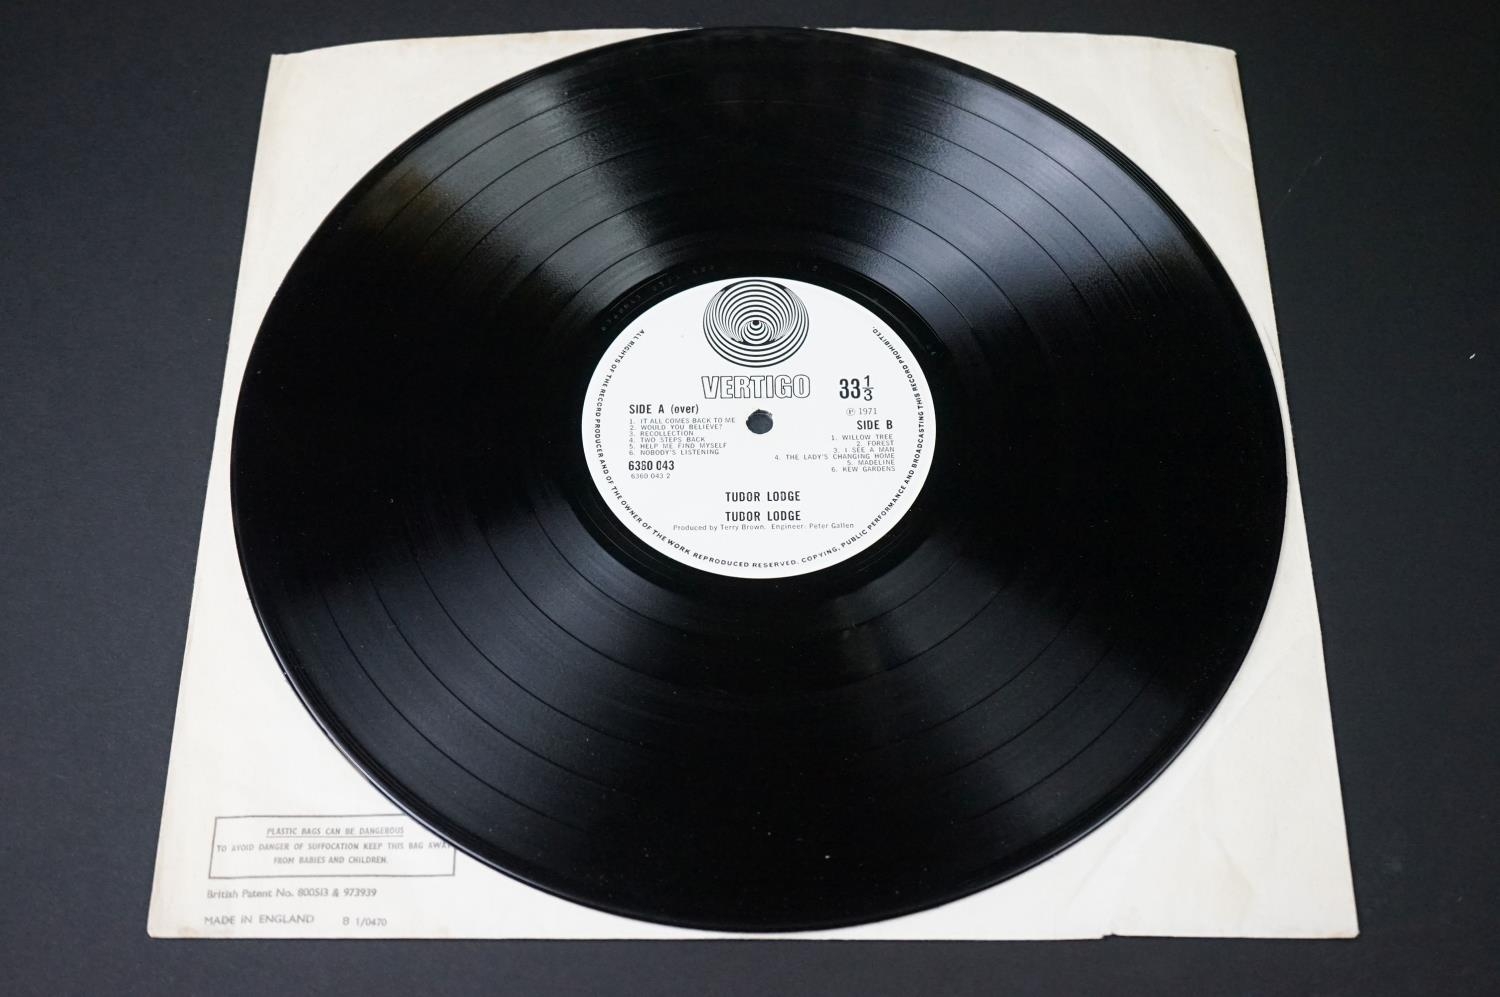 Vinyl - Tudor Lodge self titled LP on Vertigo Records 6360 043. Original UK 1971 1st pressing. - Image 3 of 6